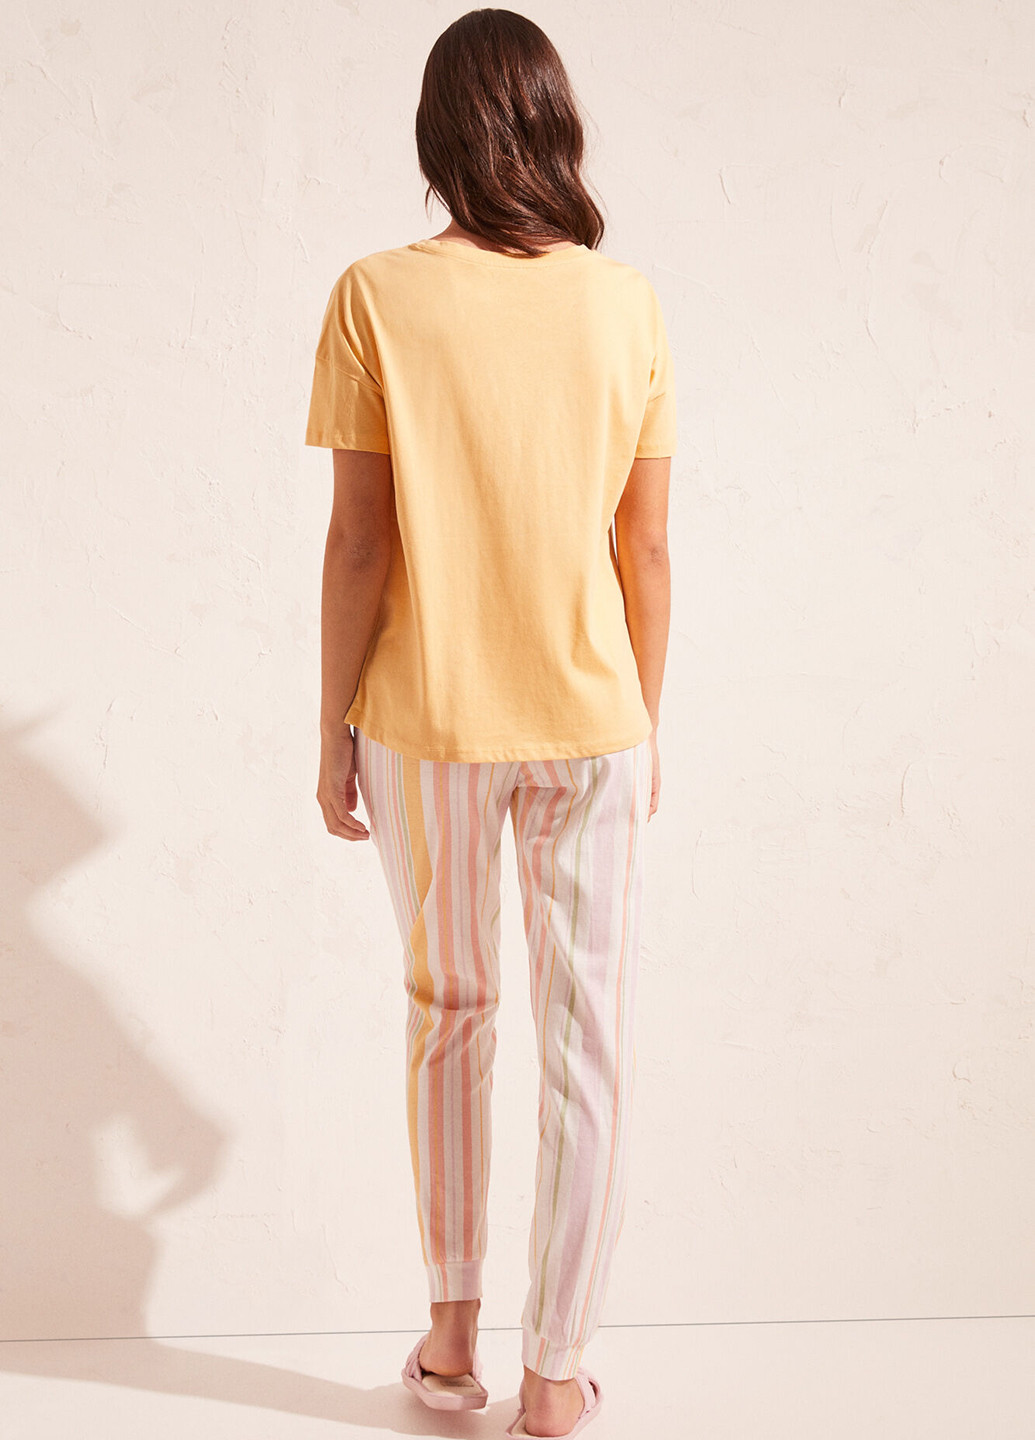 Жовта всесезон піжама (футболка, штани) футболка + штани Women'secret